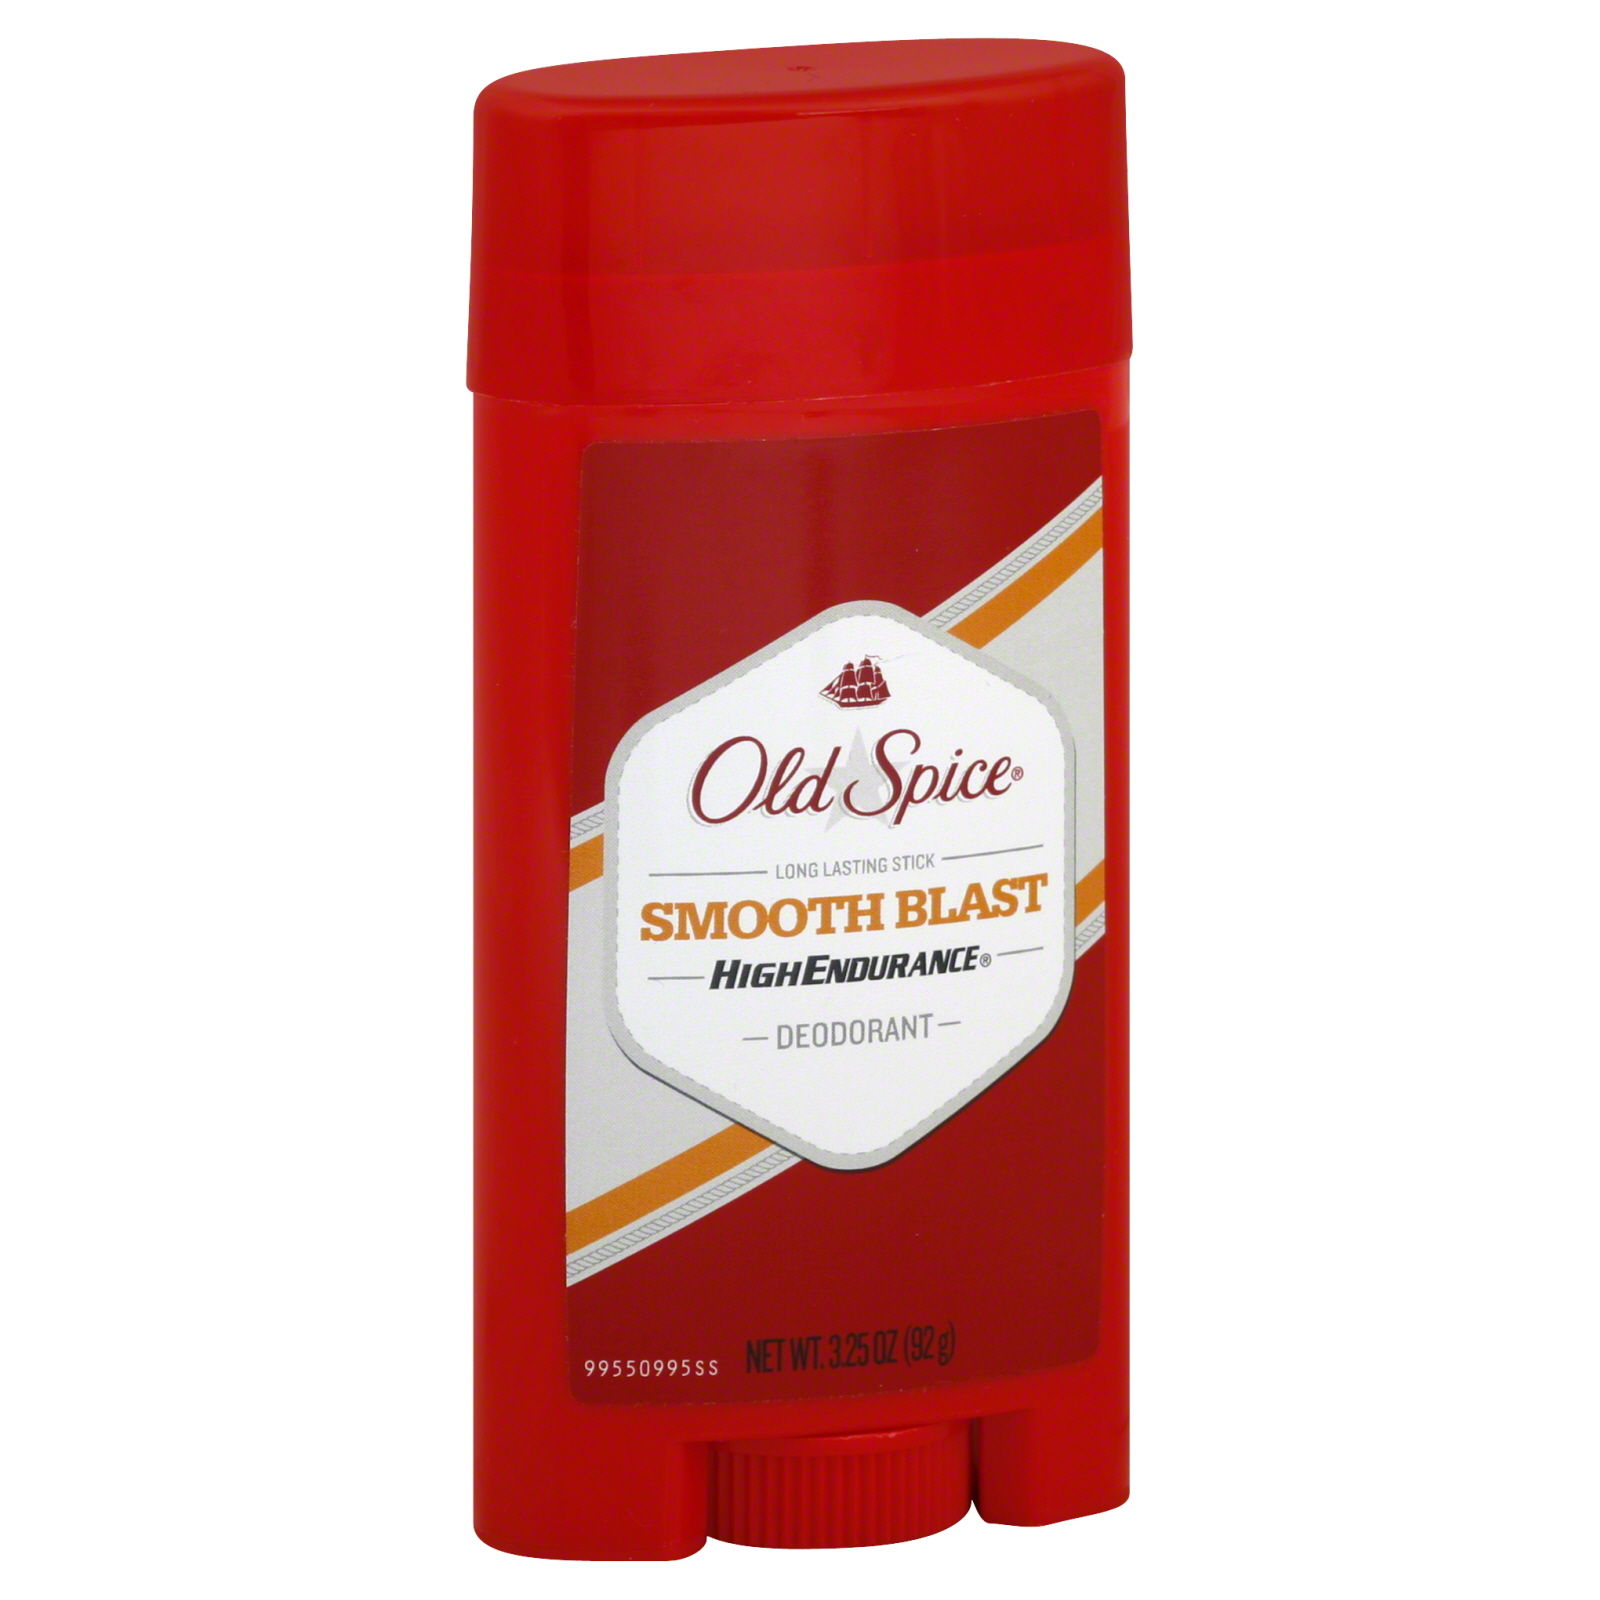 Old Spice High Endurance Deodorant, Long Lasting Stick, Smooth Blast, 3.25 oz (92 g)